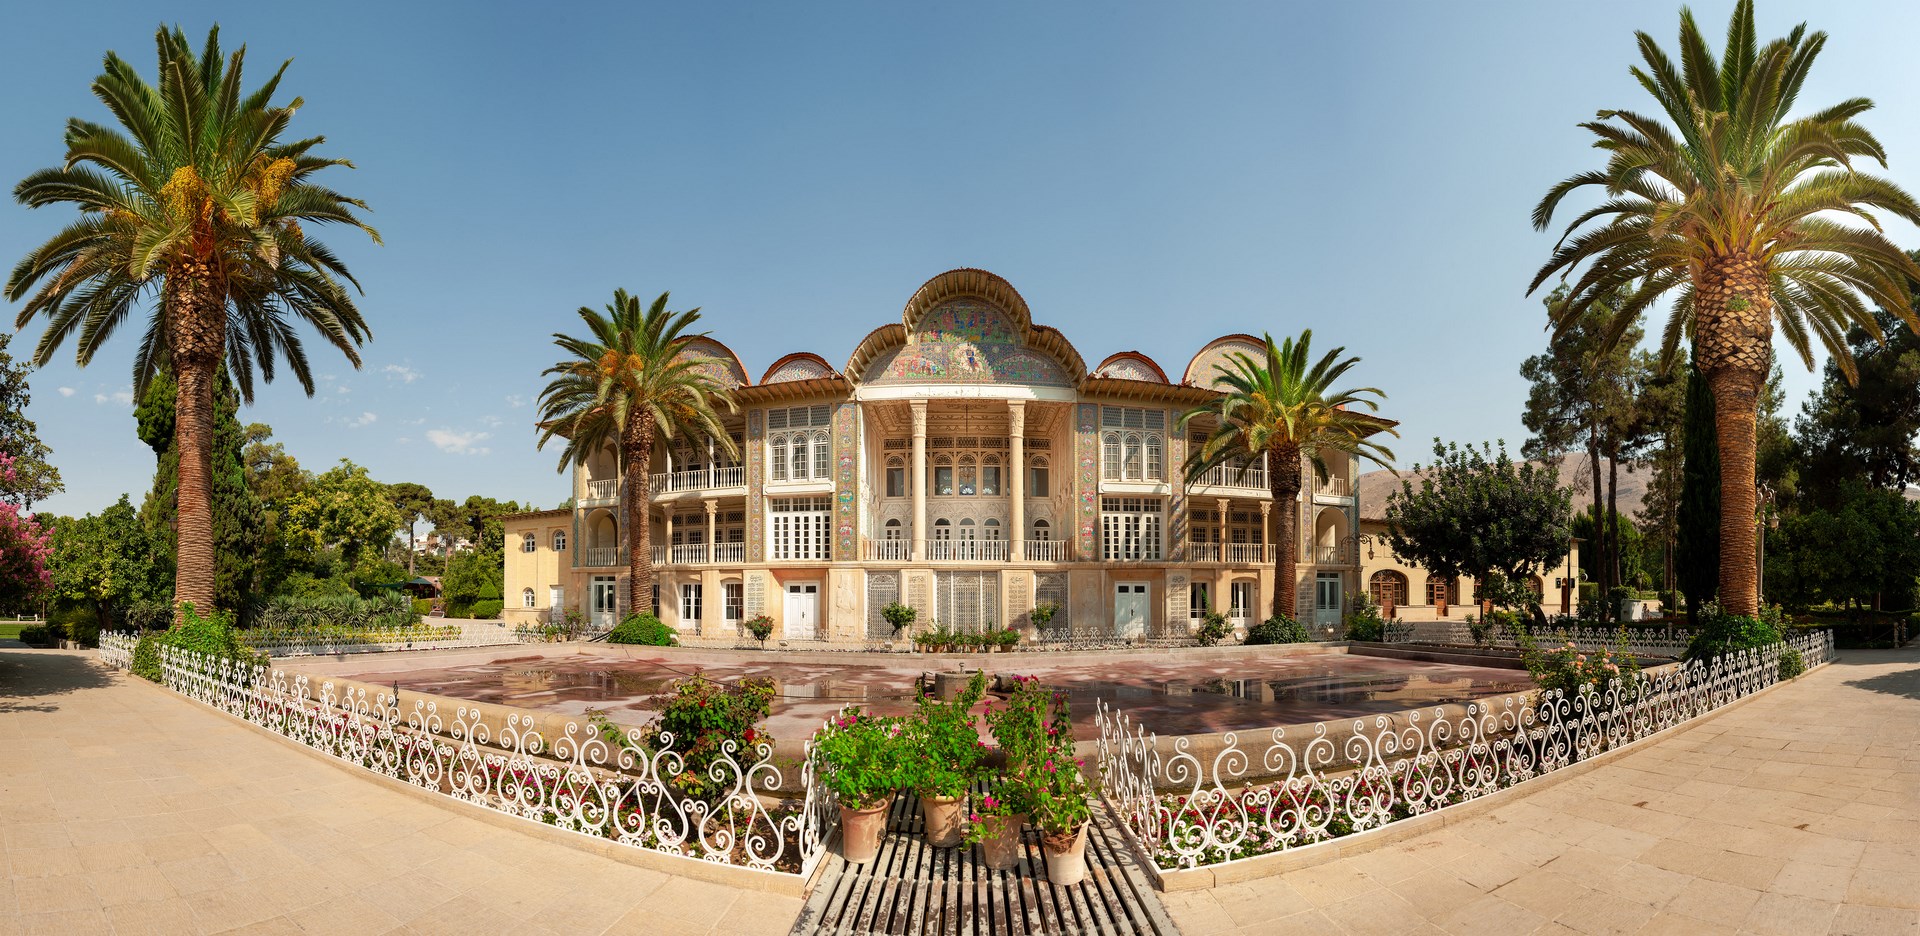 Visit the Splendid Persian Gardens of Shiraz